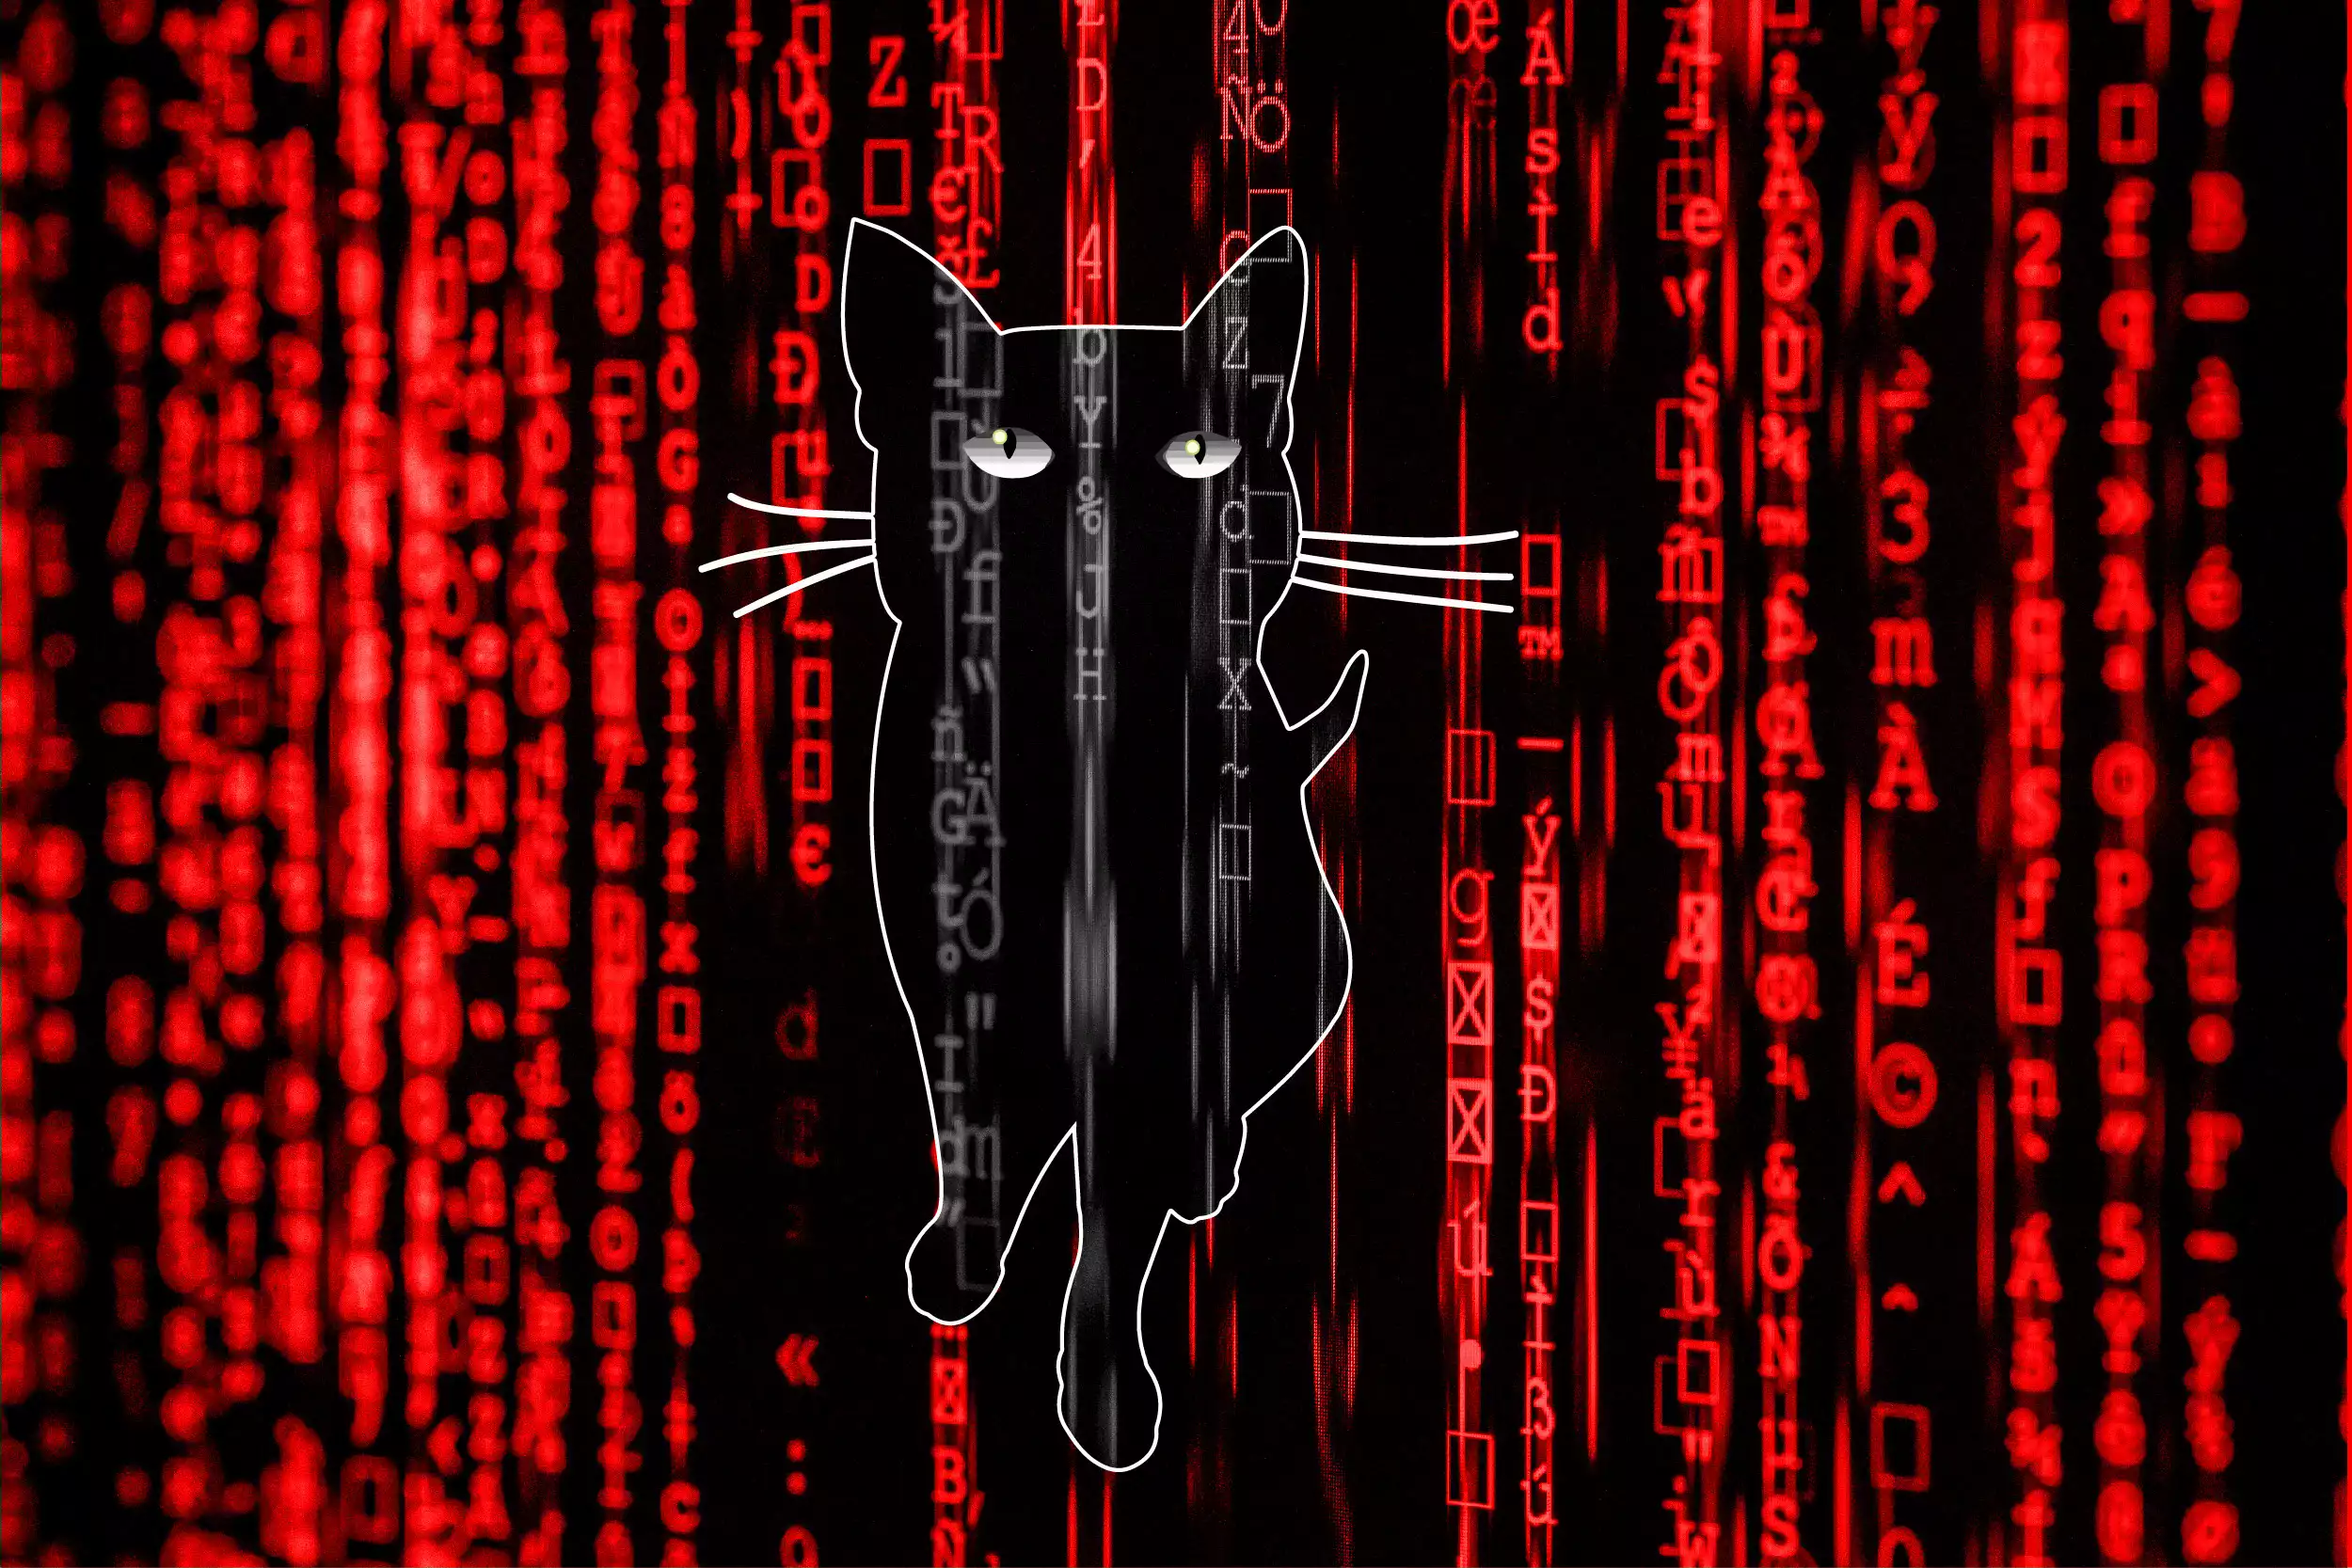 takian.ir malicious windows kernel drivers used in blackcat ransomware attacks 1